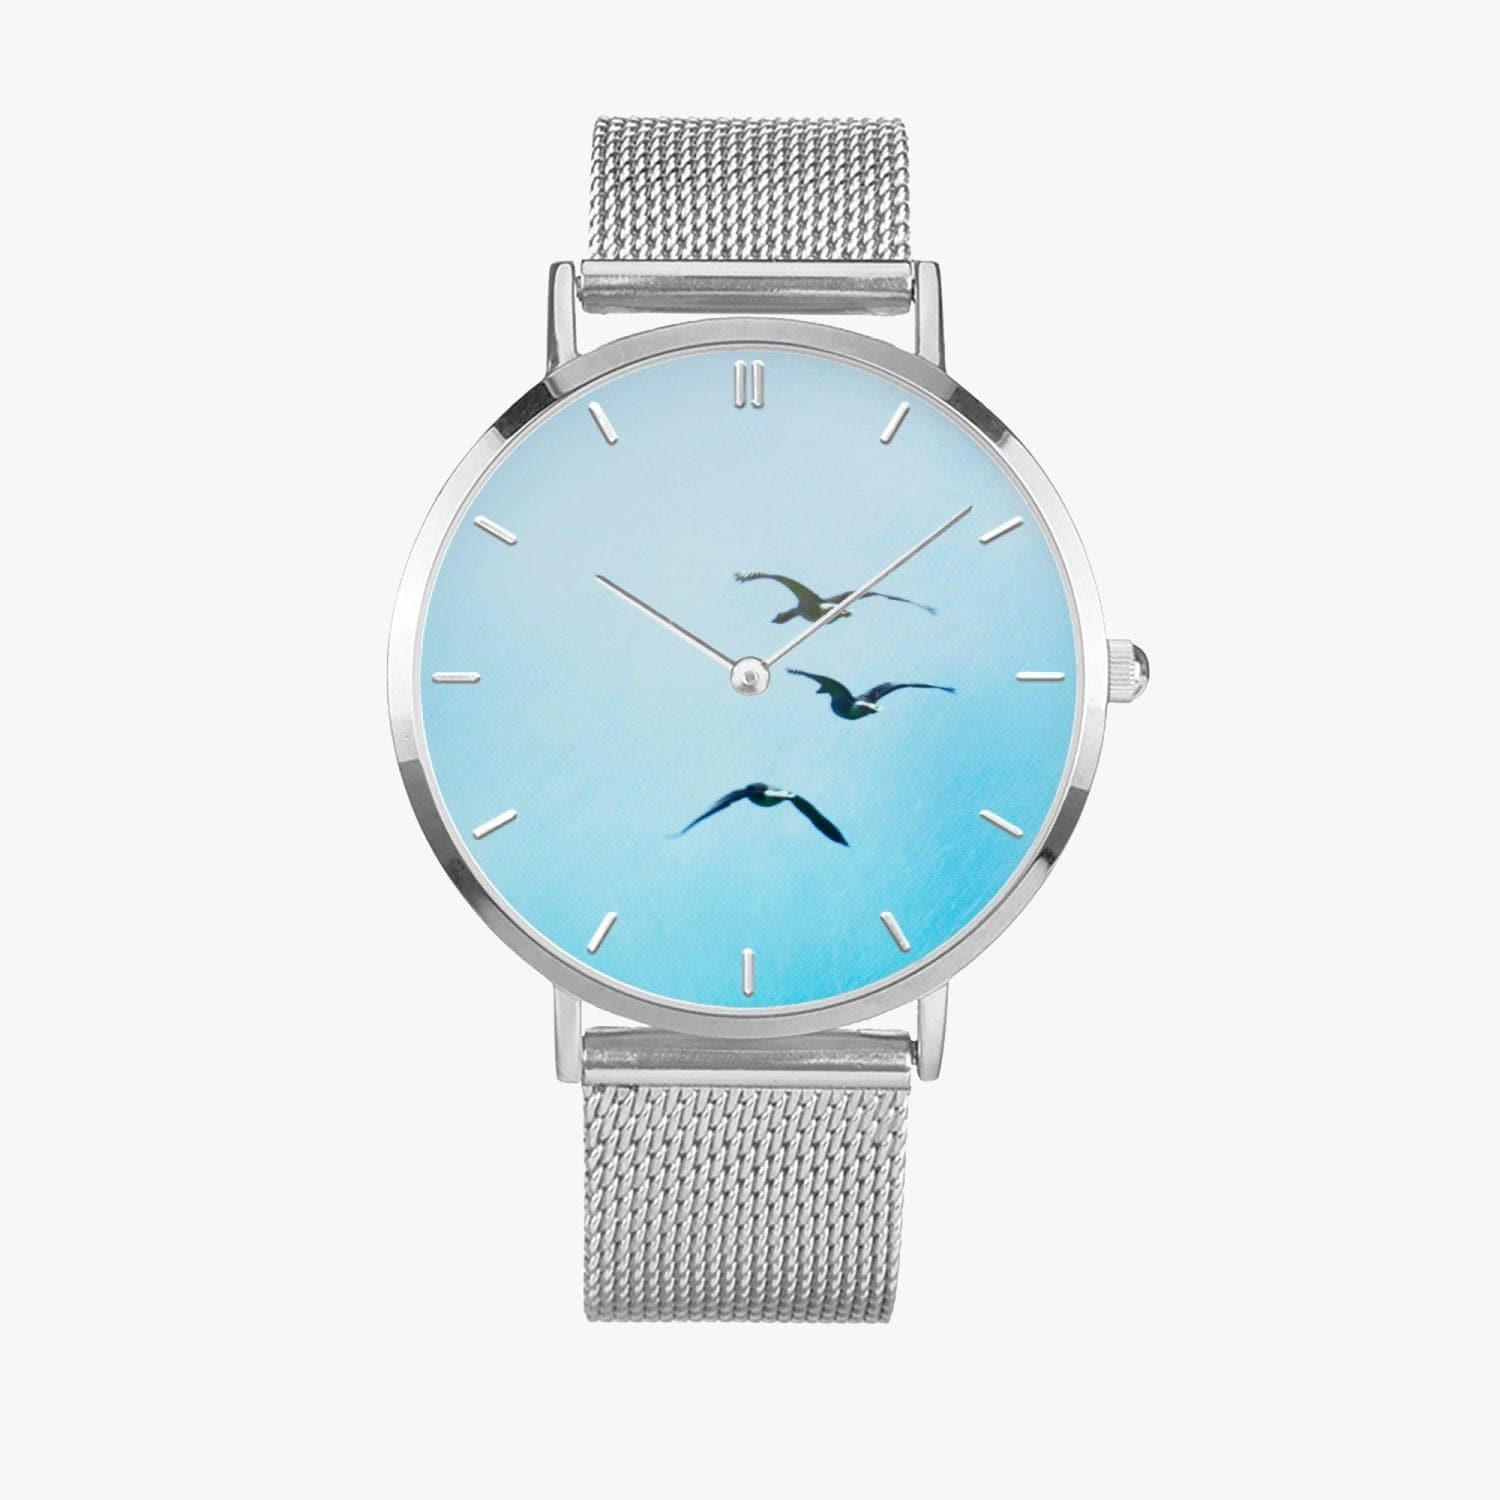 Time flies. Fashion Ultra-thin Stainless Steel Quartz Watch, by Sensus Studio Design